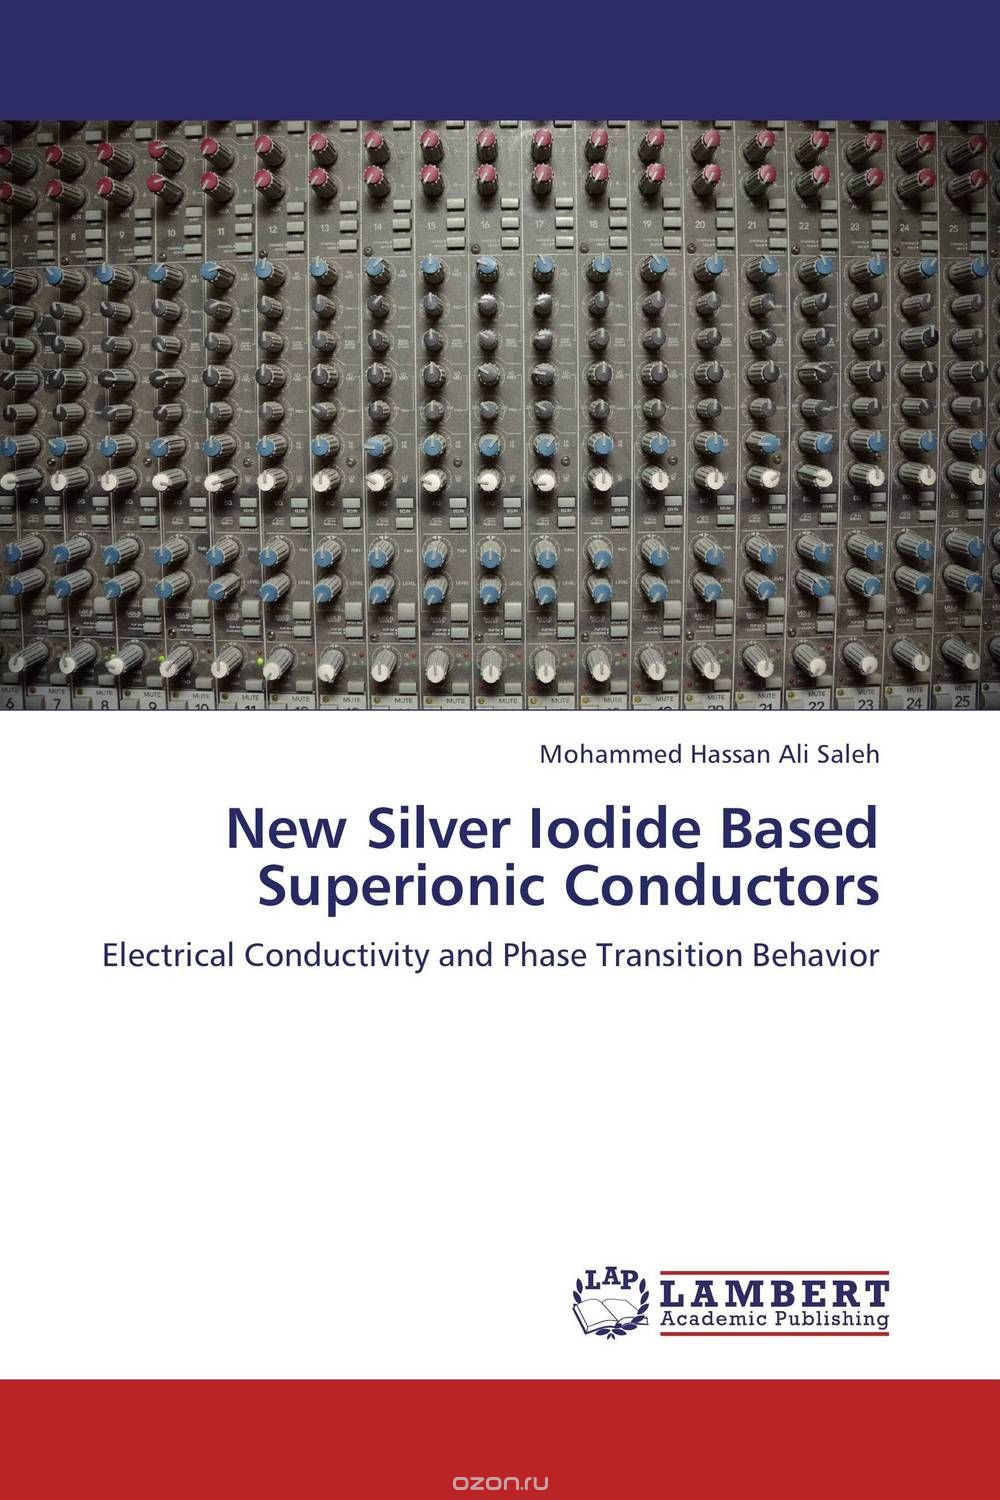 Скачать книгу "New Silver Iodide Based Superionic Conductors"